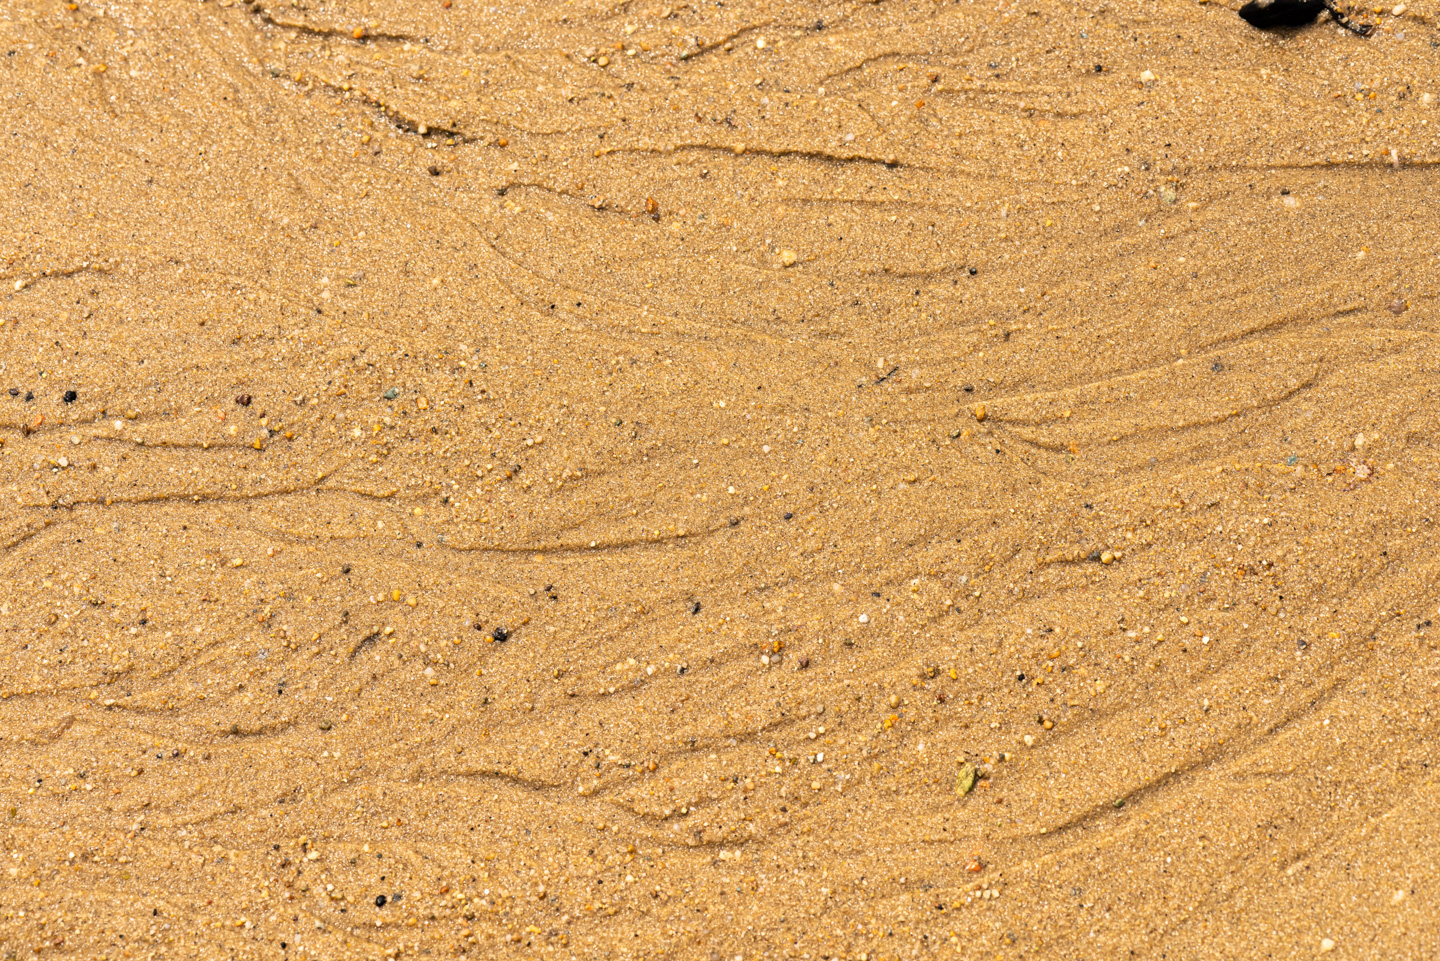 Water trails in beach sand